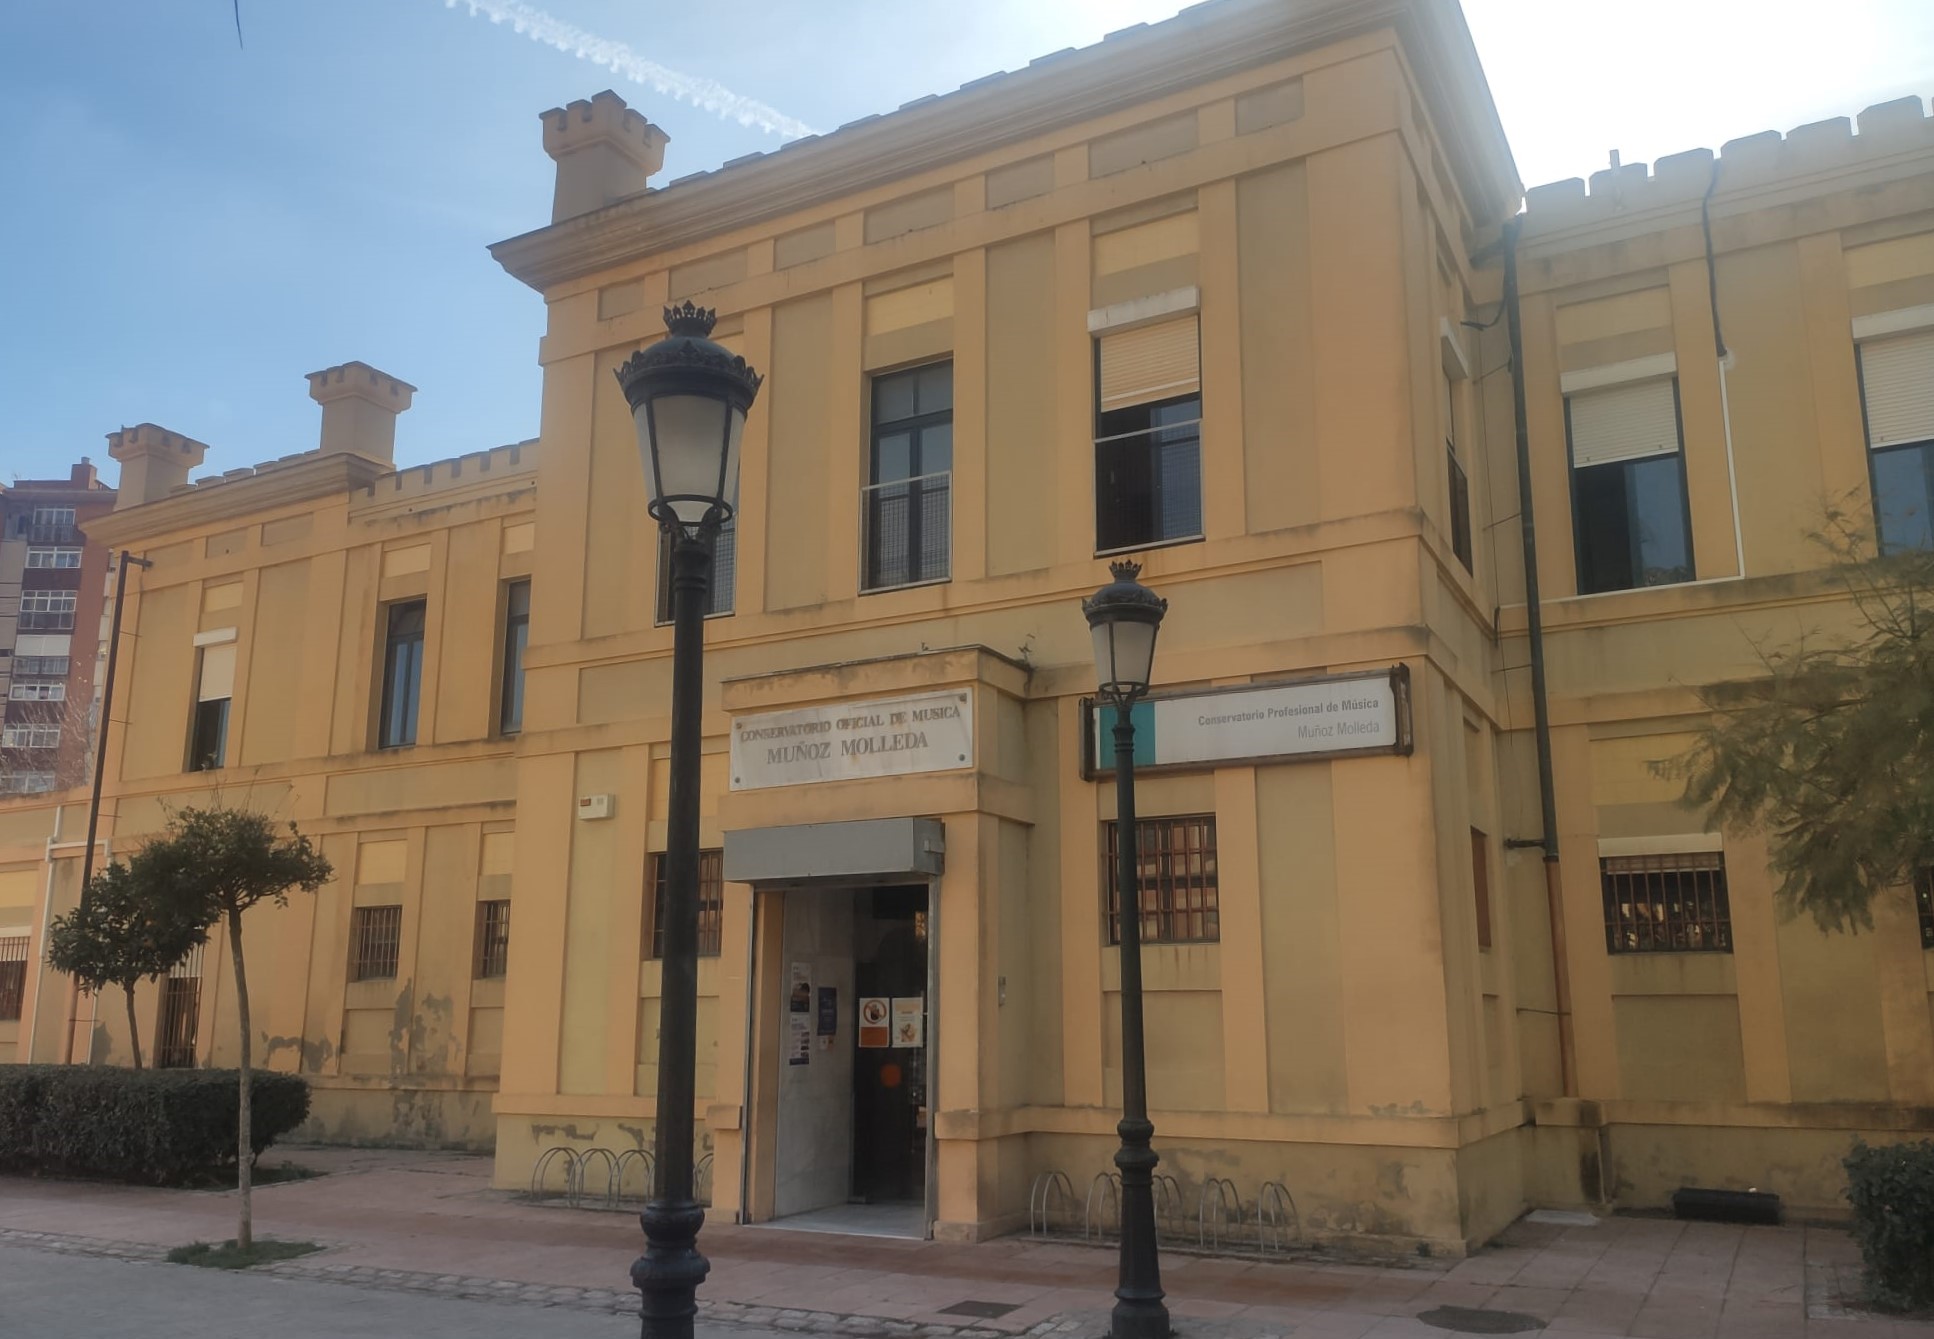 Conservatorio Muñoz Molleda exterior